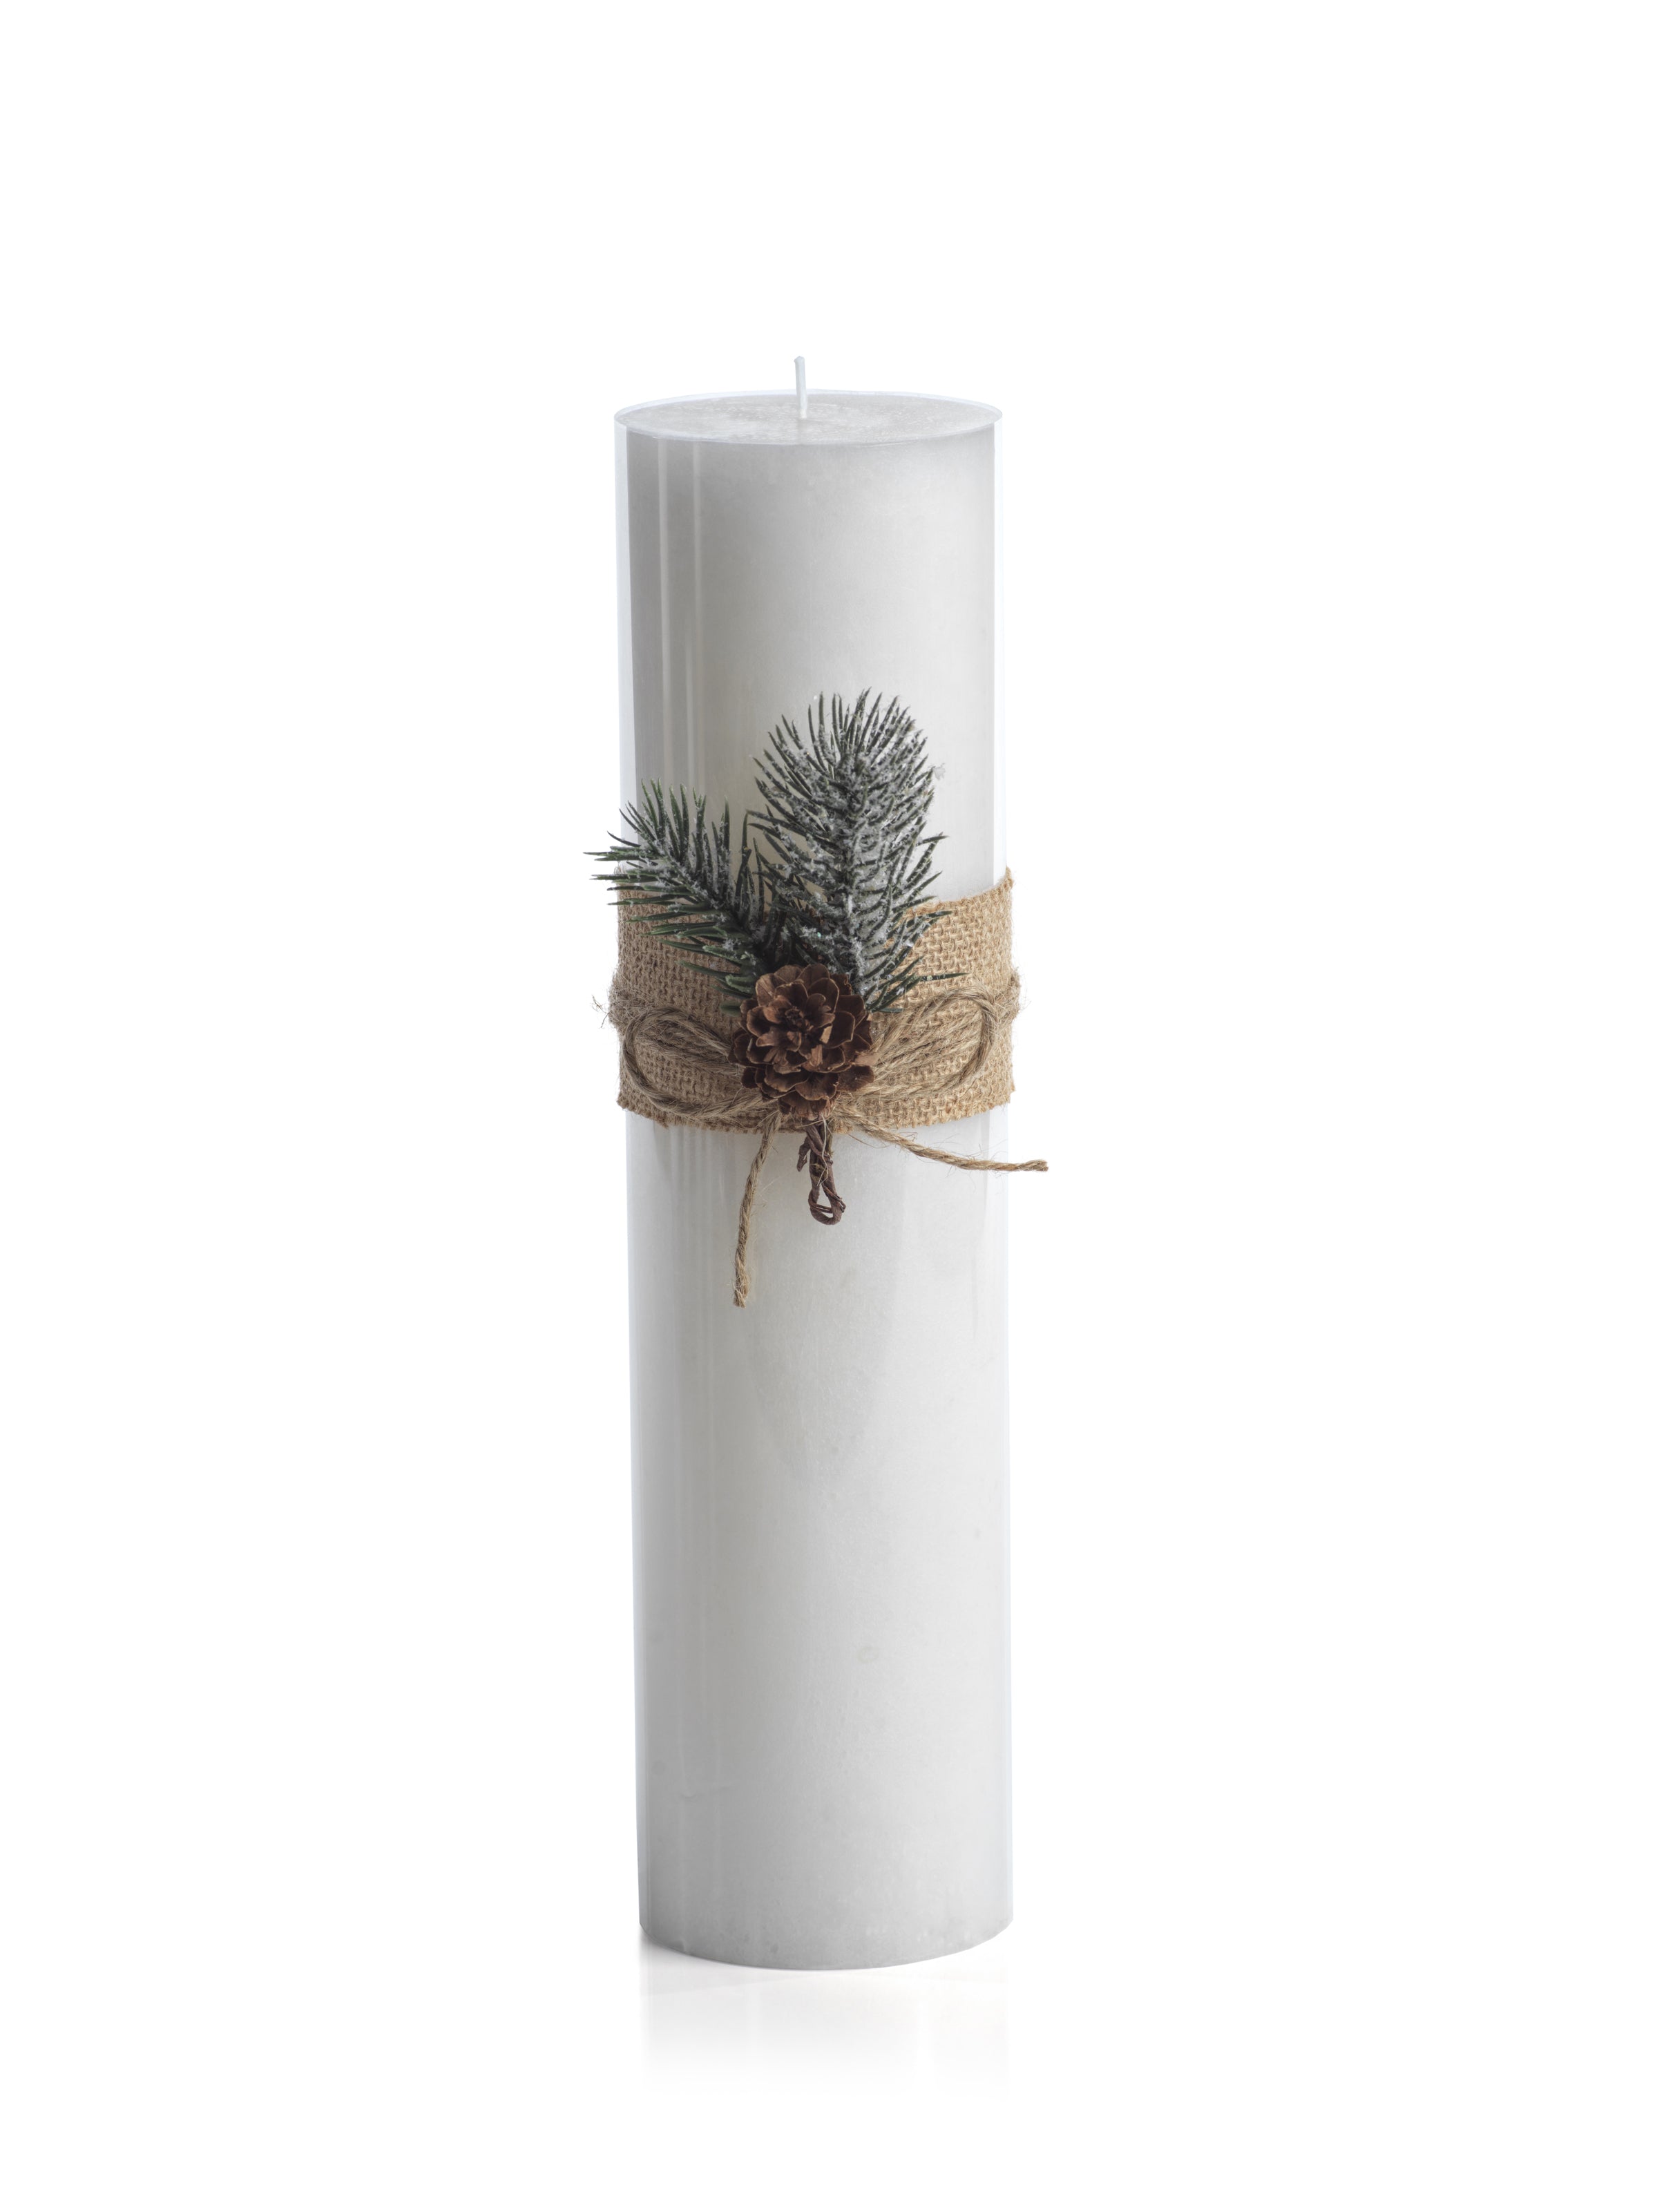 Siberian Fir Fragranced Pillar Candles - CARLYLE AVENUE